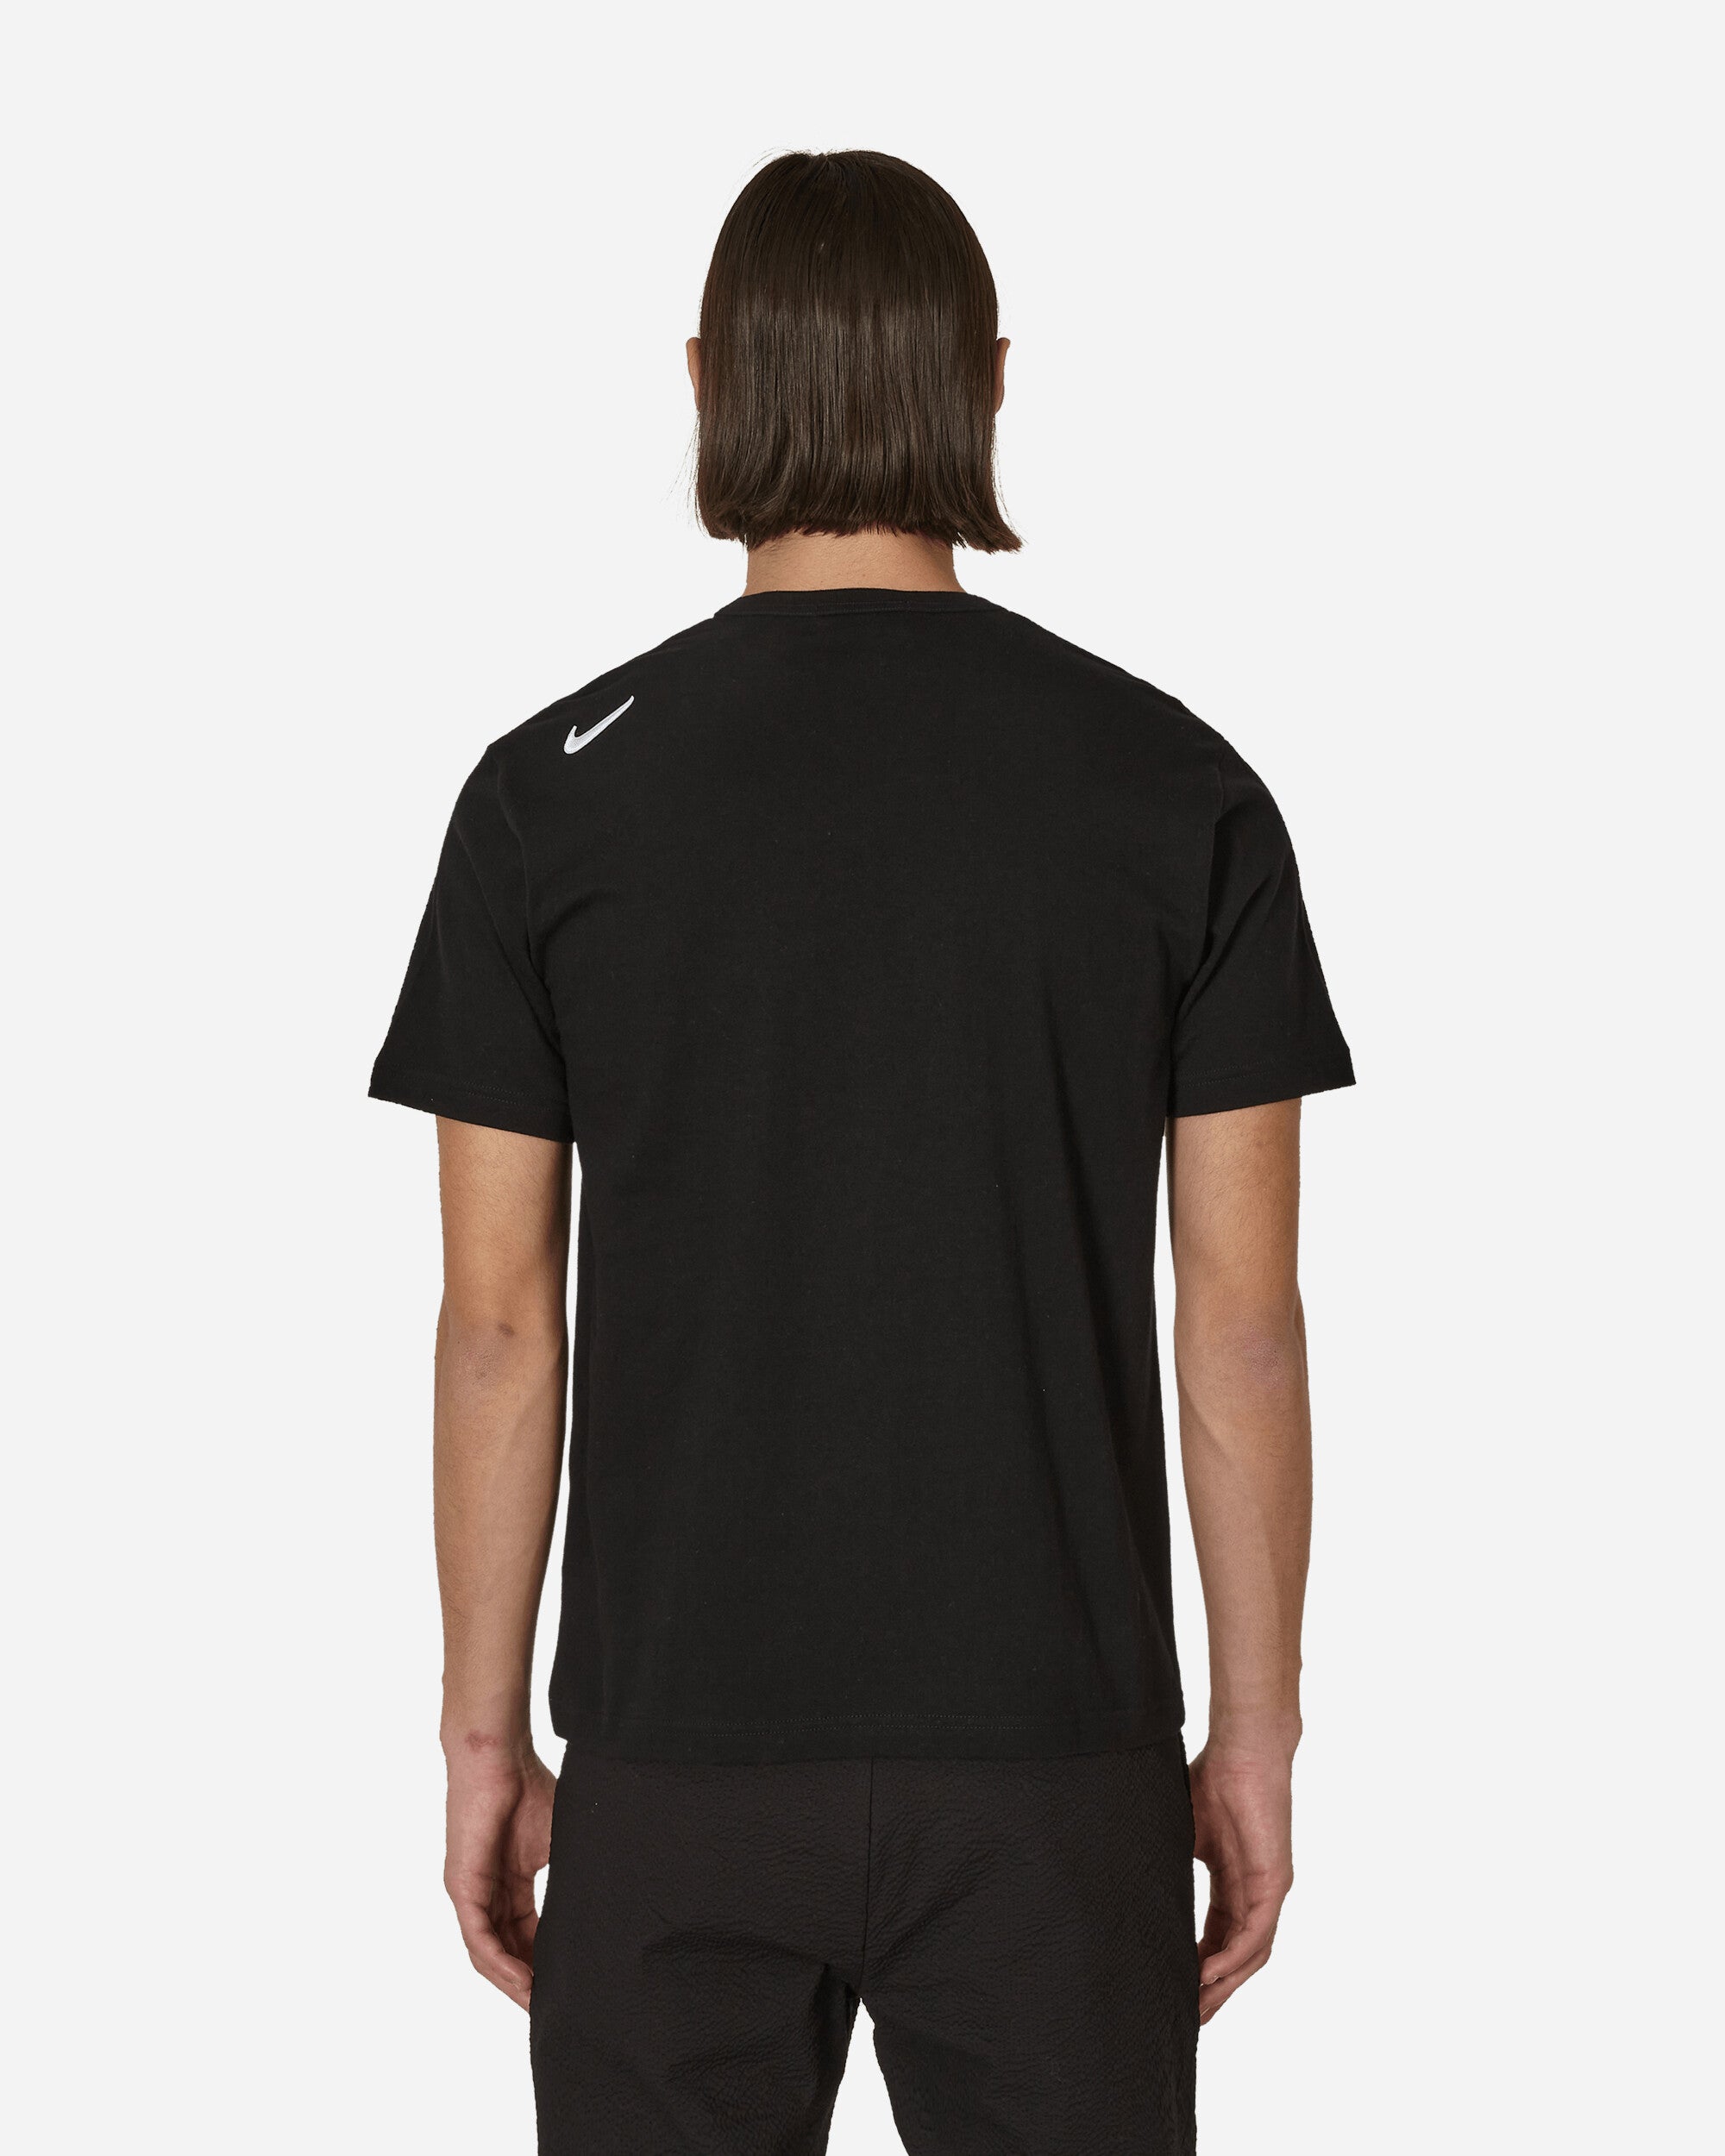 Comme Des Garçons Black T-Shirt Black/White T-Shirts Shortsleeve 1K-T108-S23 1